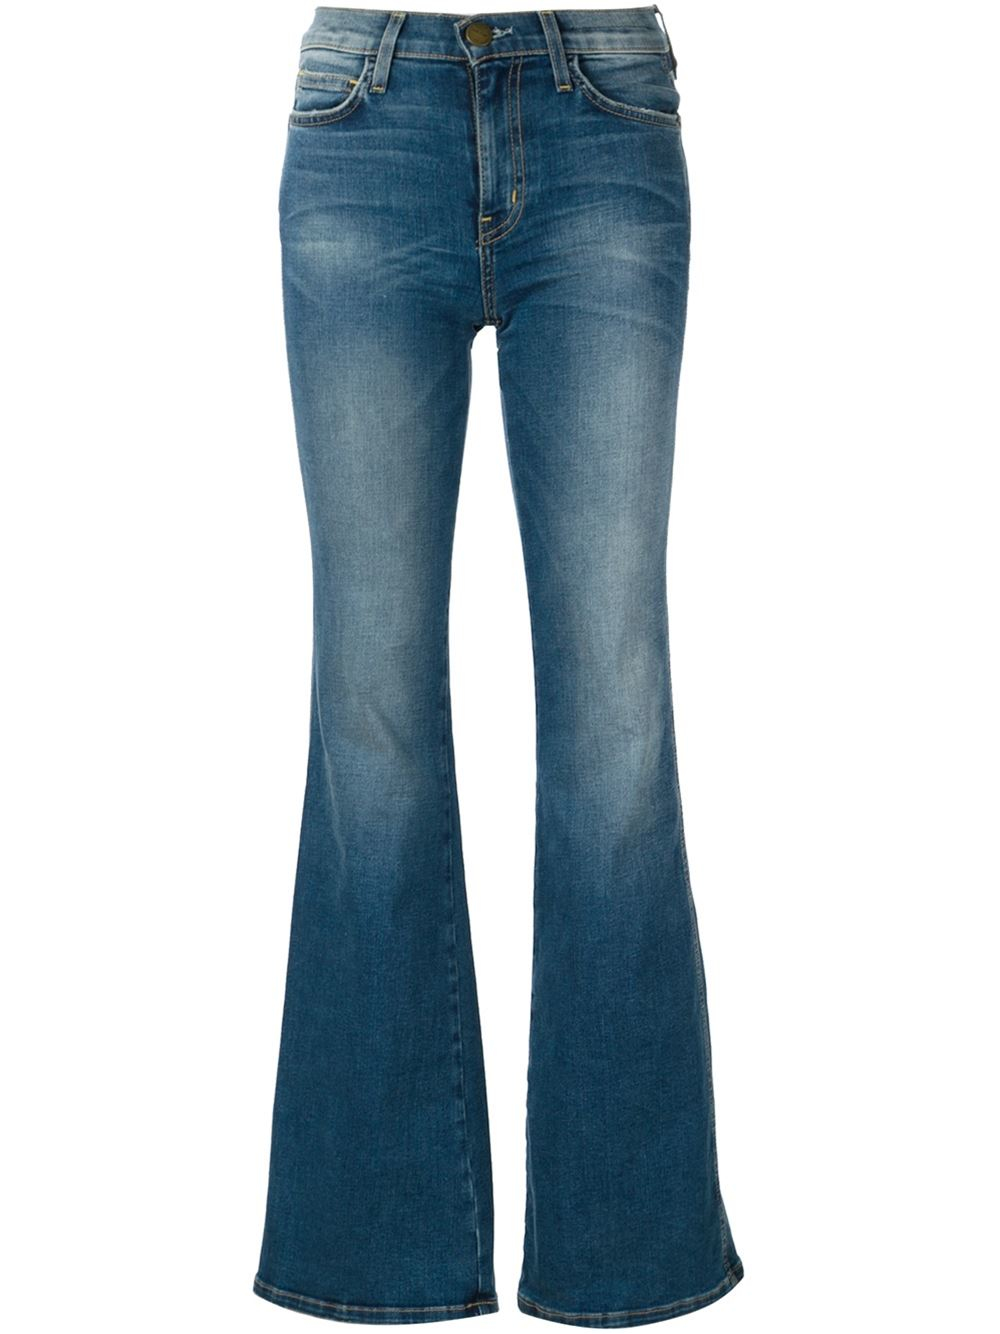 Current/elliott - 'the Girl Crush' Jeans - Women - Cotton/polyester ...